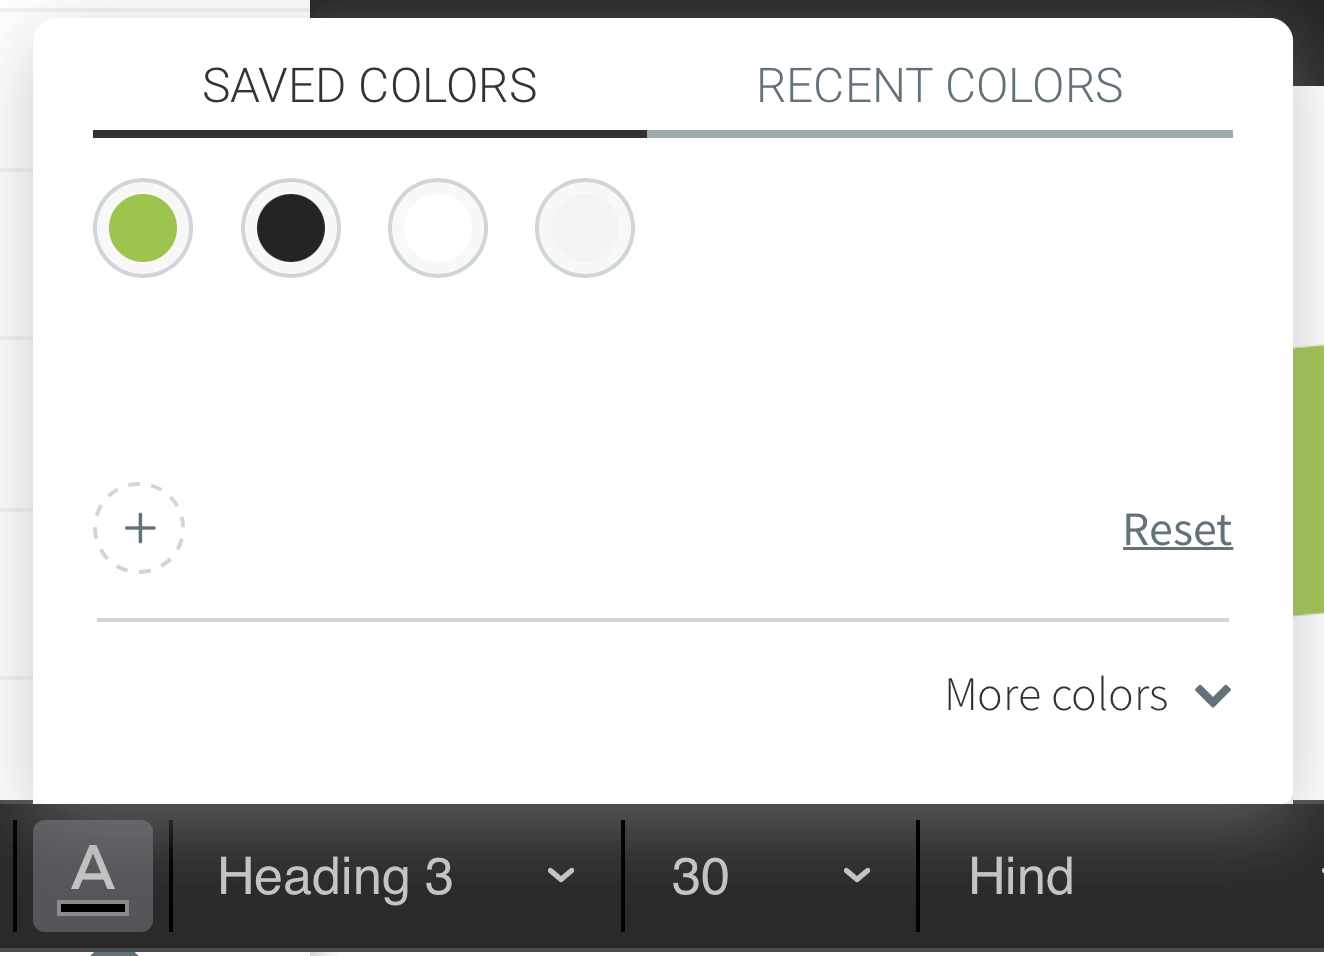 Duda's saved colors palette